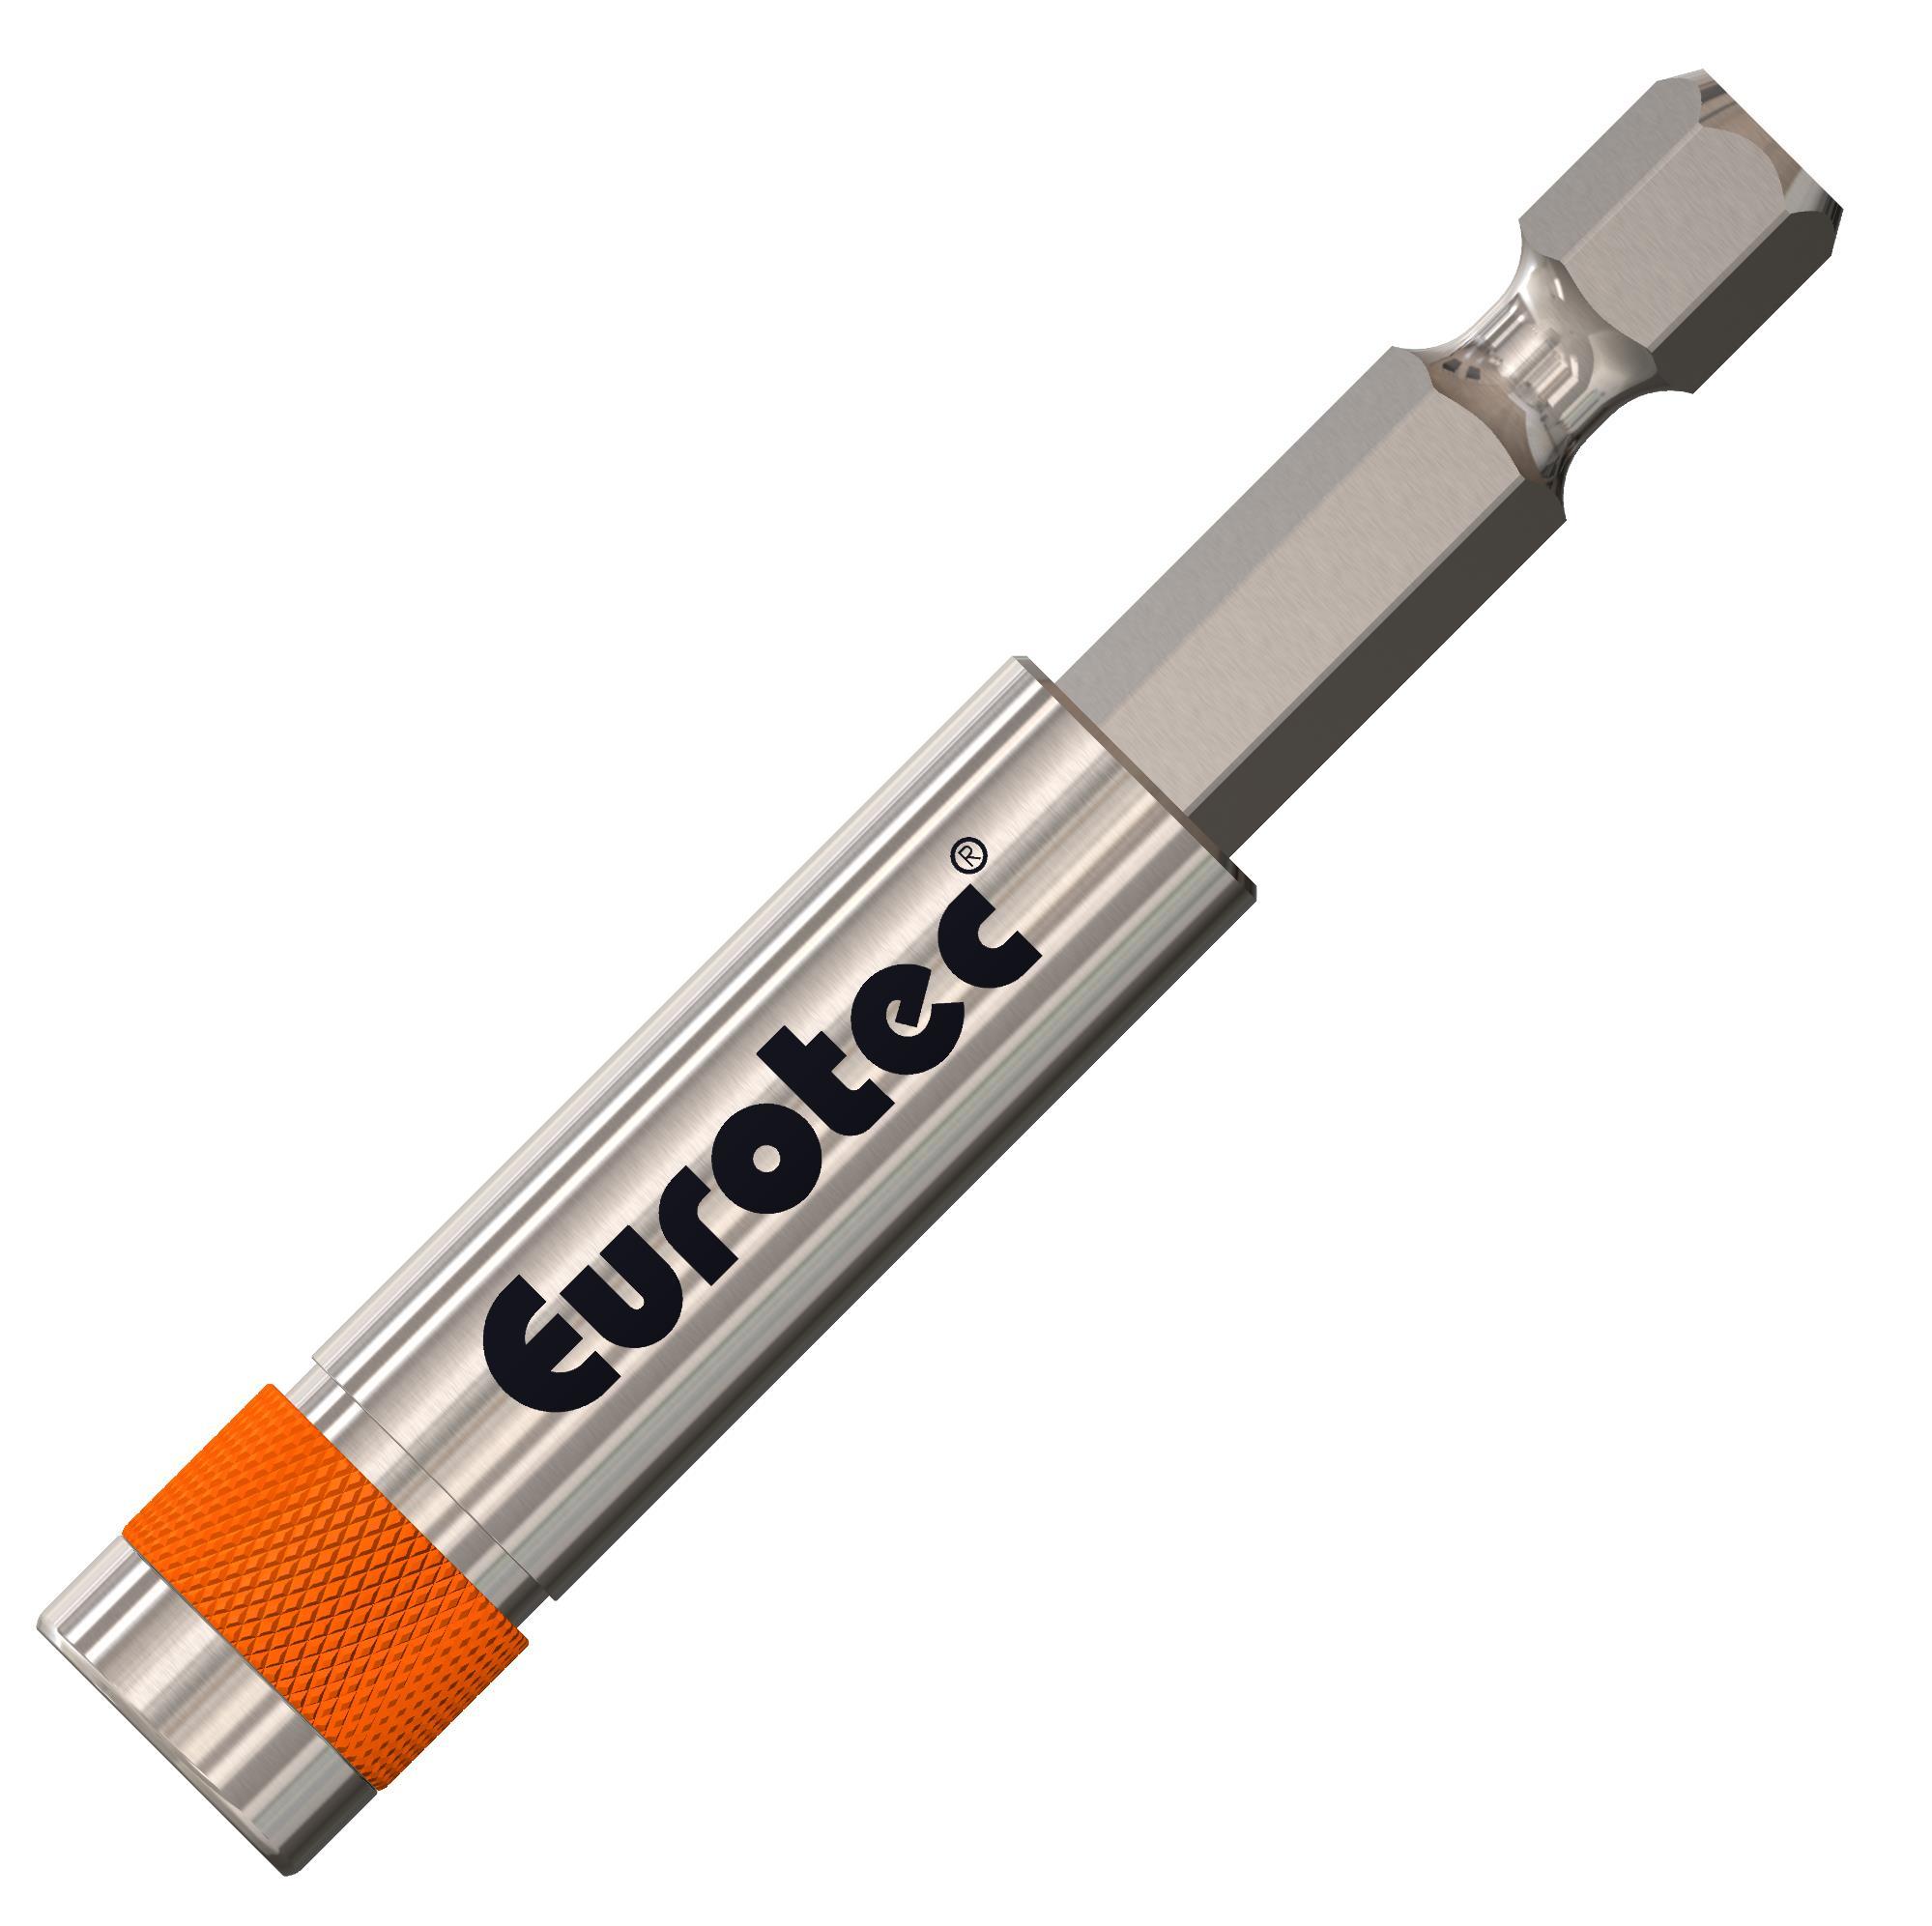 Eurotec Bithalter 66 mm